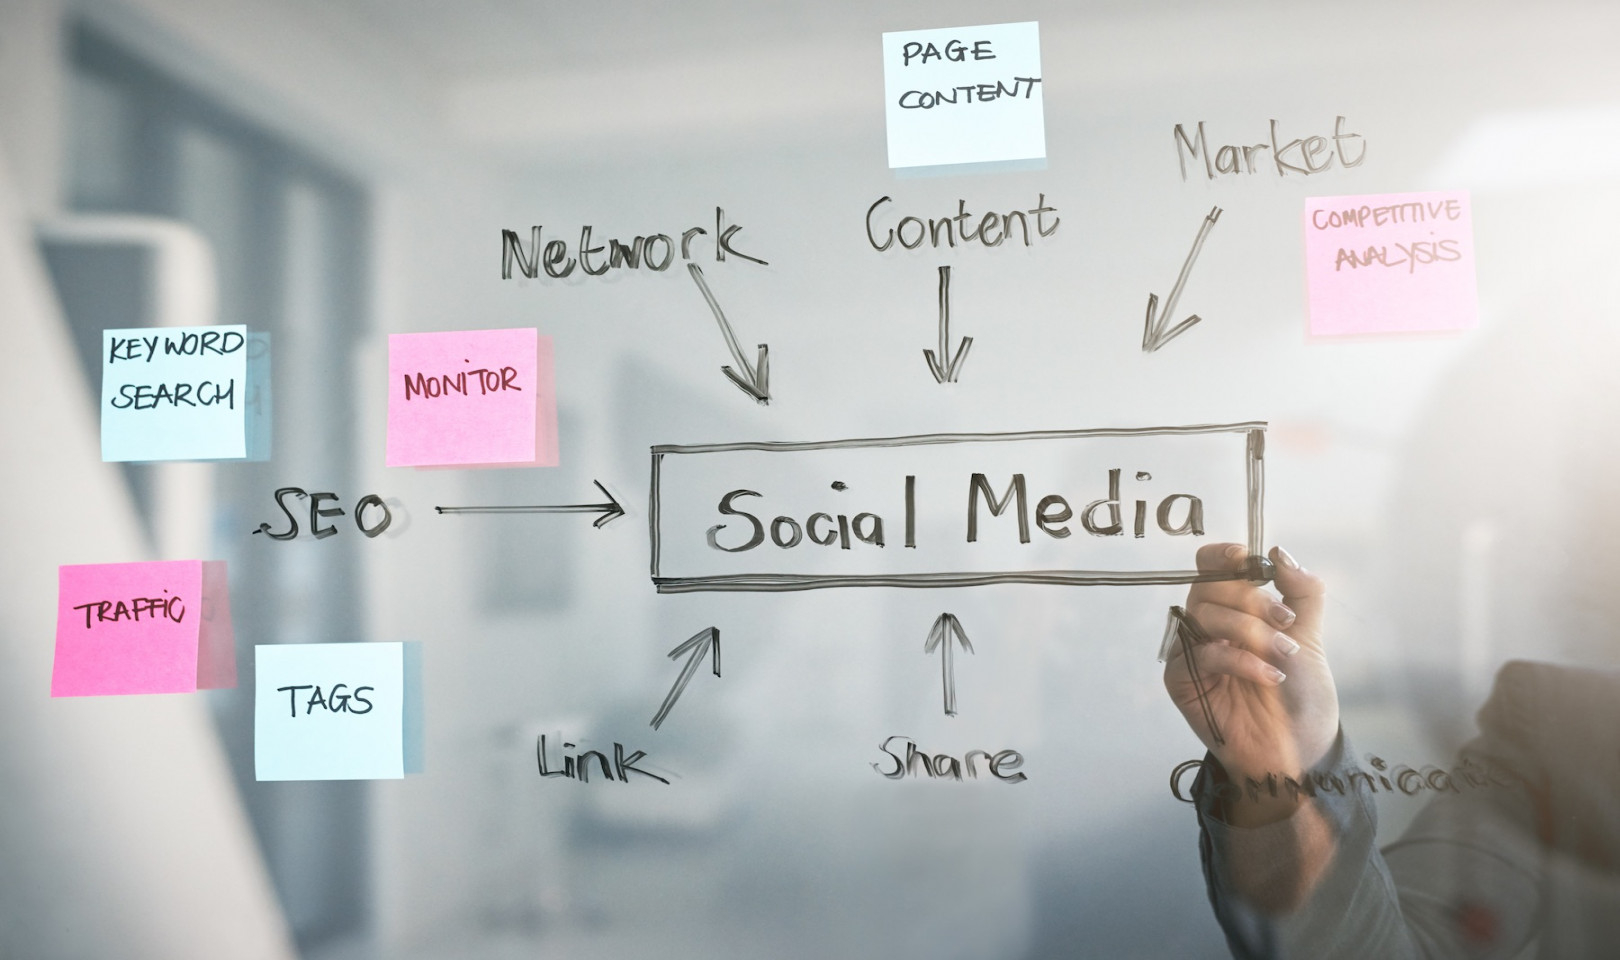 Social Media Manager Jobs - Discover Social Media Manager Skills